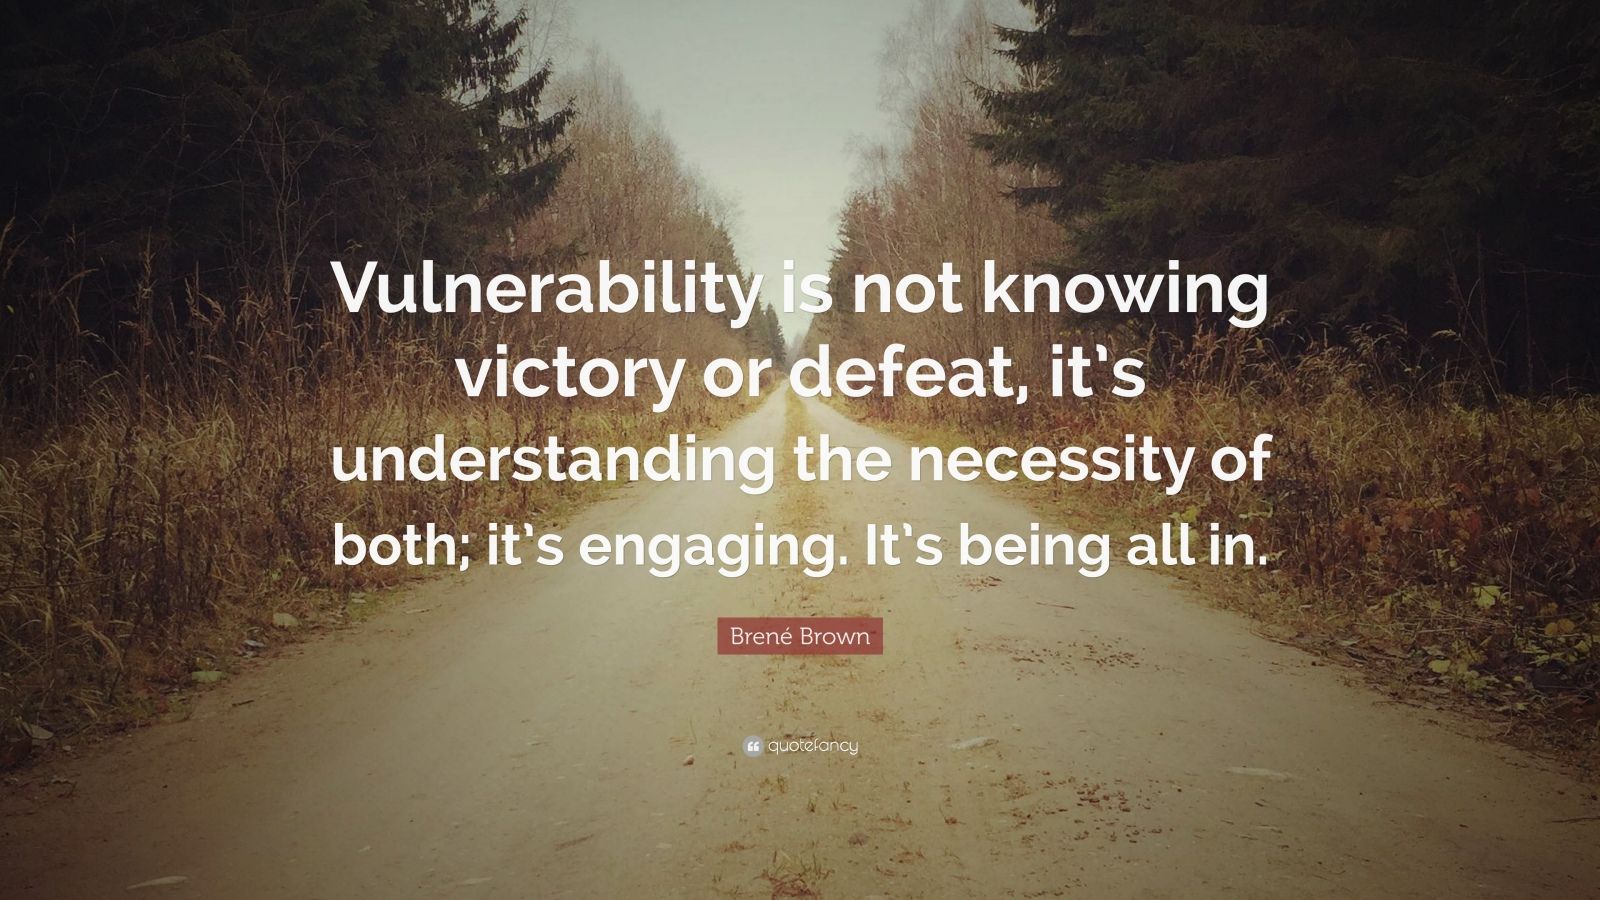 brene brown book on vulnerability